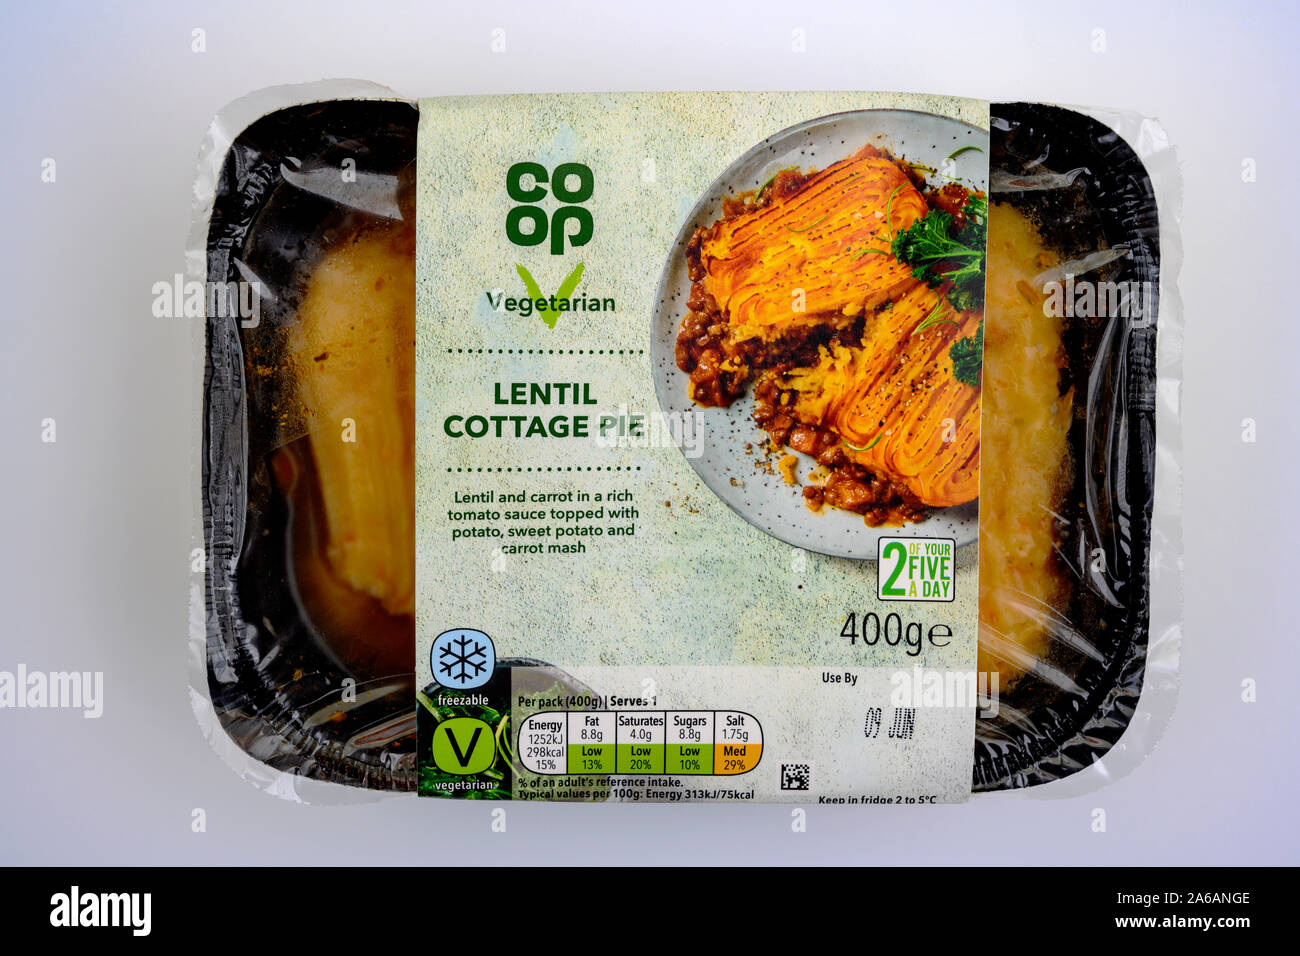 COOP Vegetarian lentil cottage pie Stock Photo